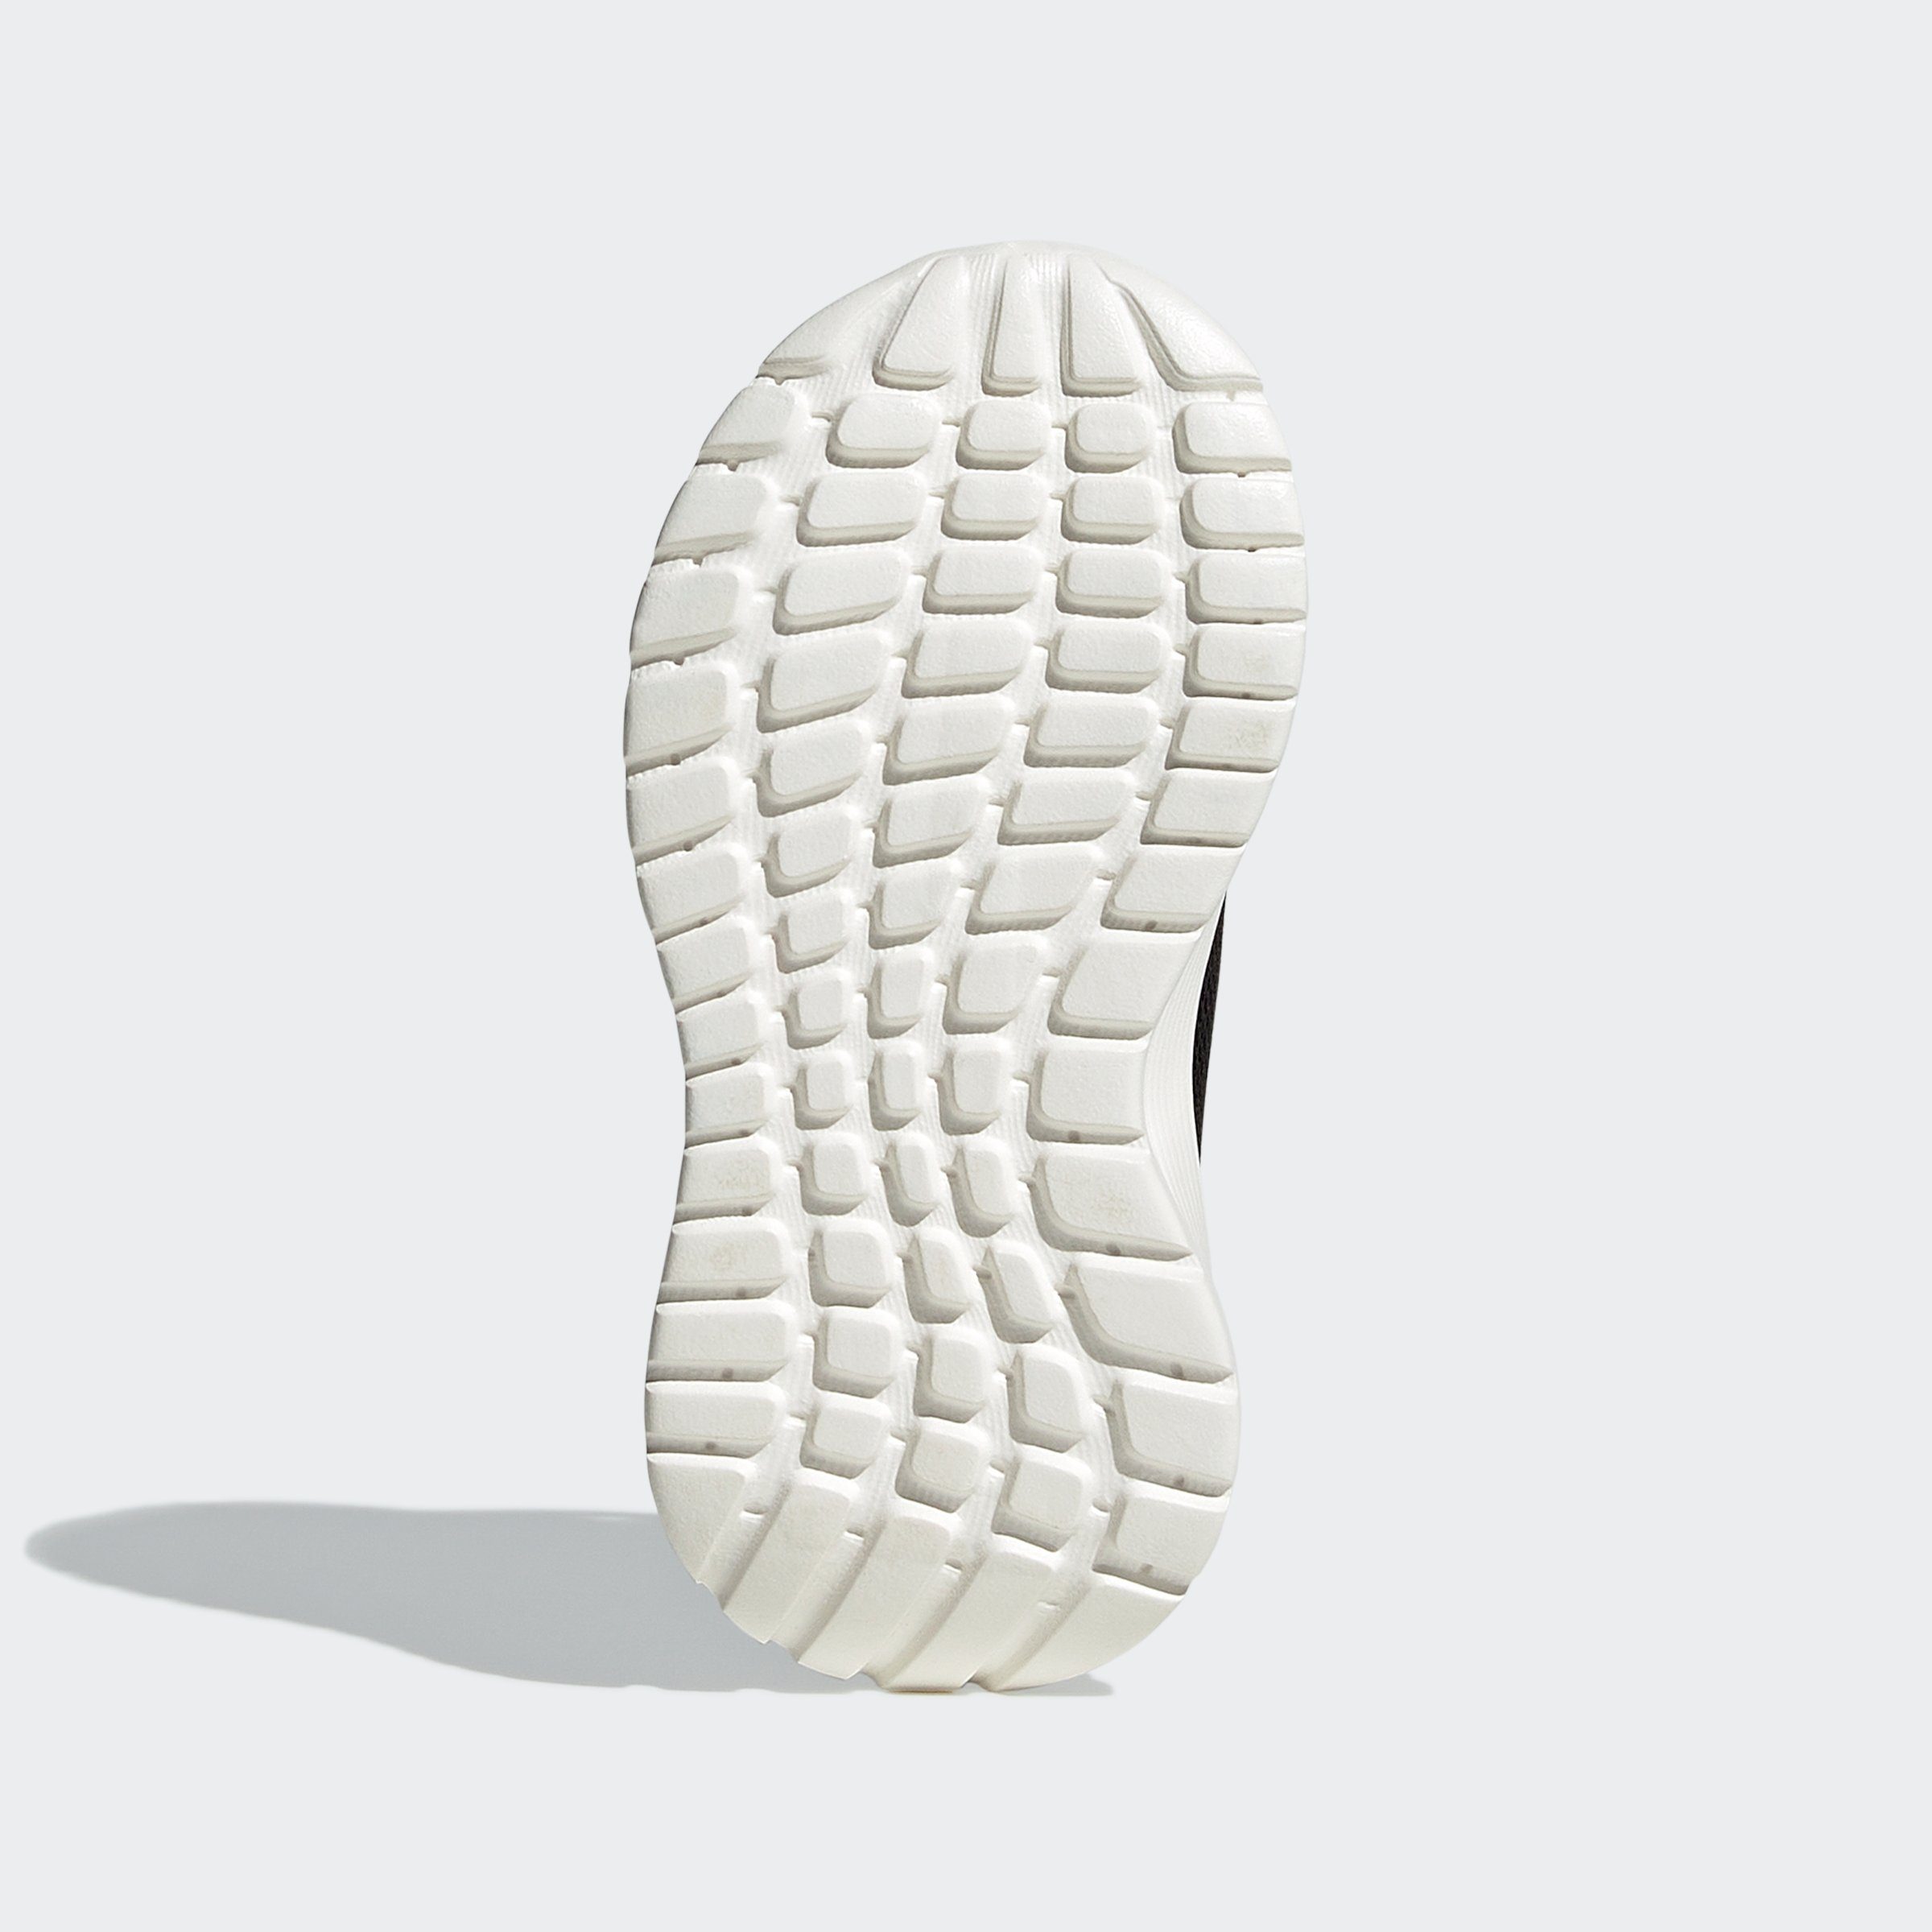 adidas Sportswear TENSAUR RUN Sneaker White / mit Grey Two / Core Klettverschluss Black Core